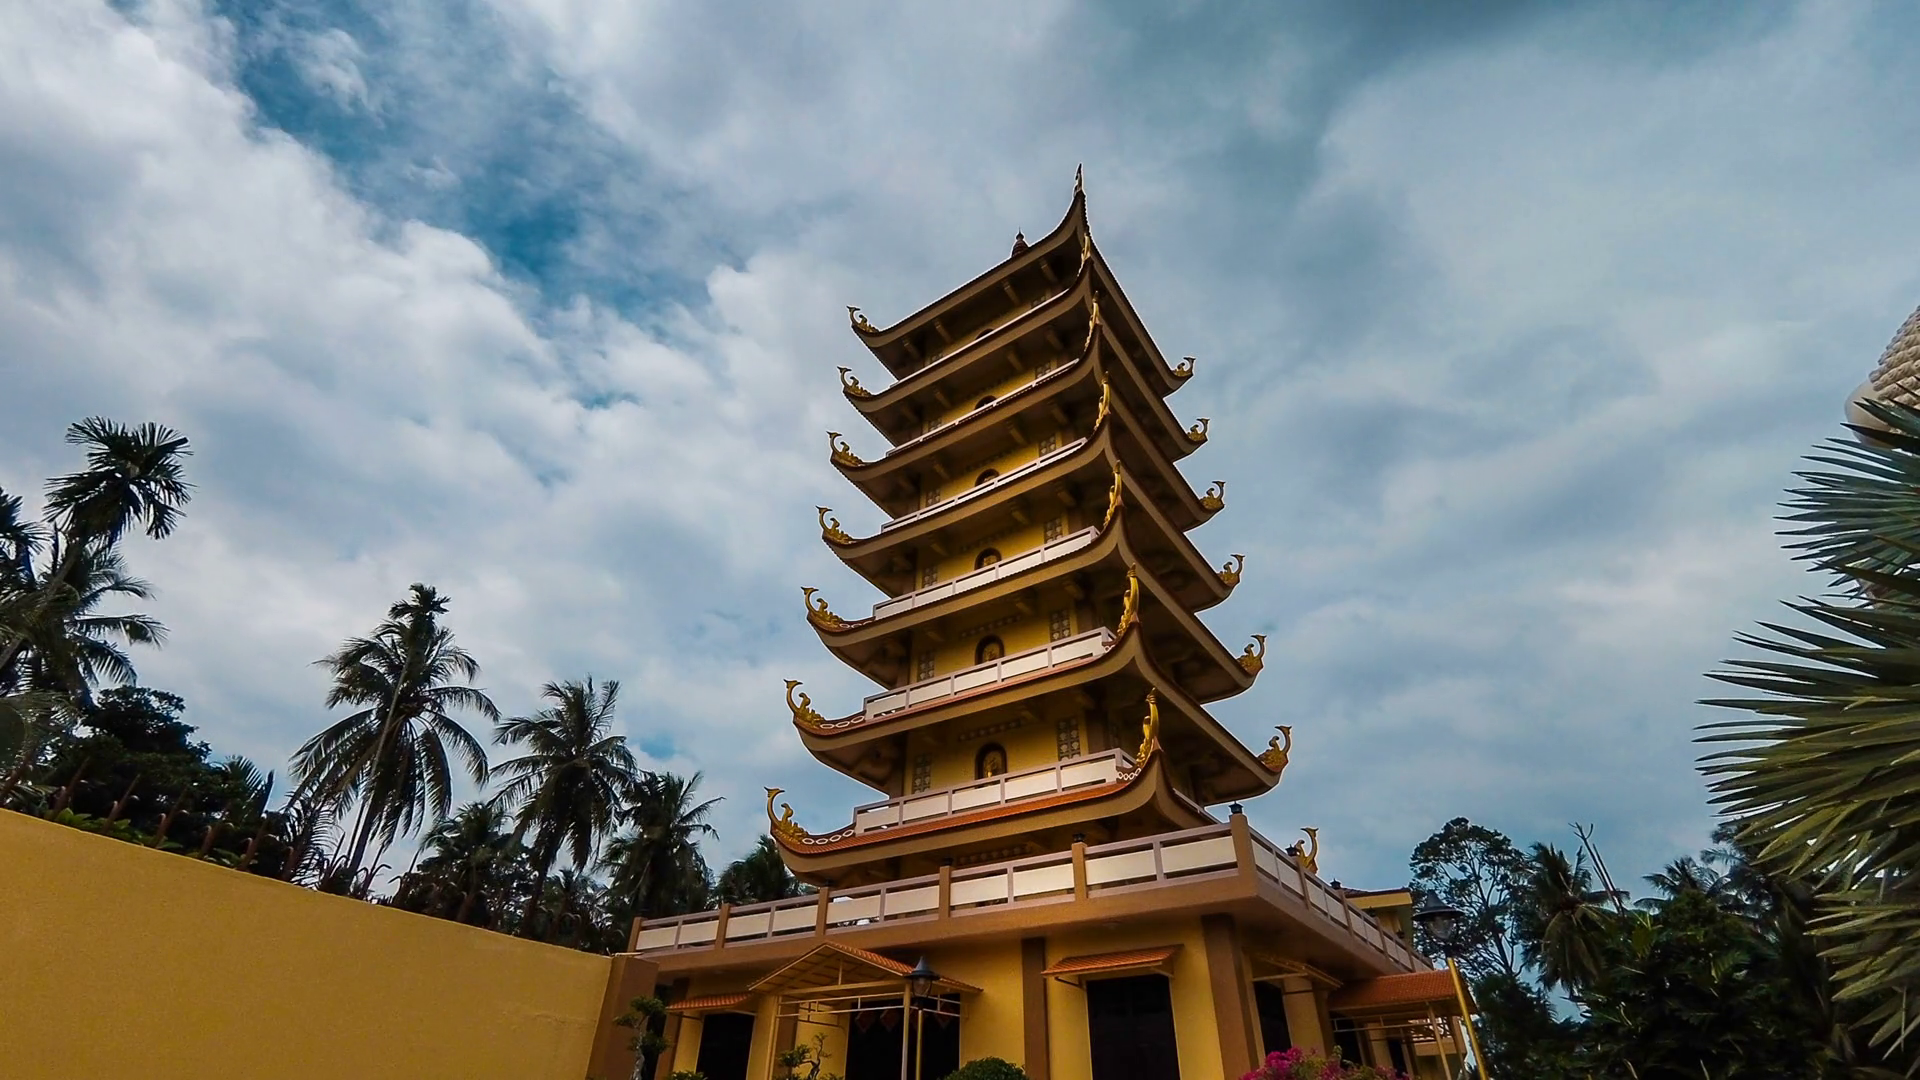 Vinh Trang Pagoda at blue sky, timelapse view of landmark Buddhist ...